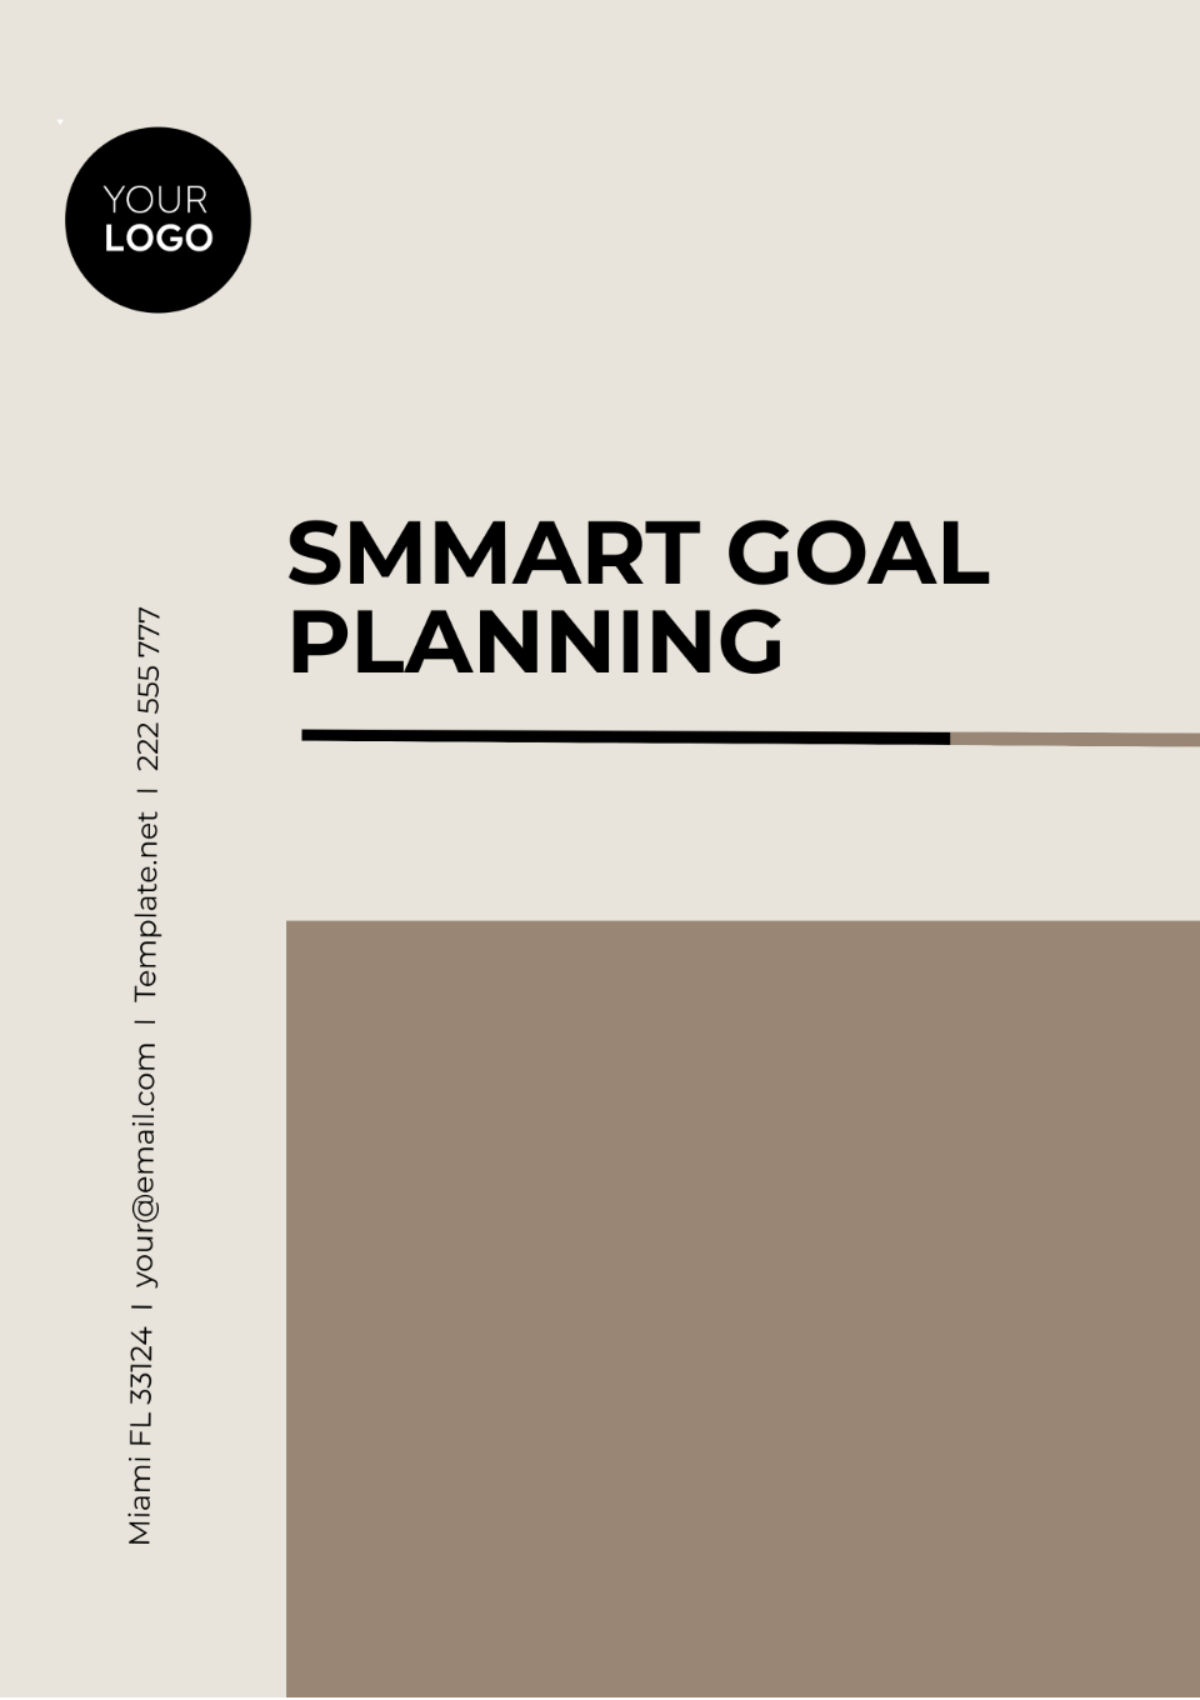 SMART Goal Planning Template